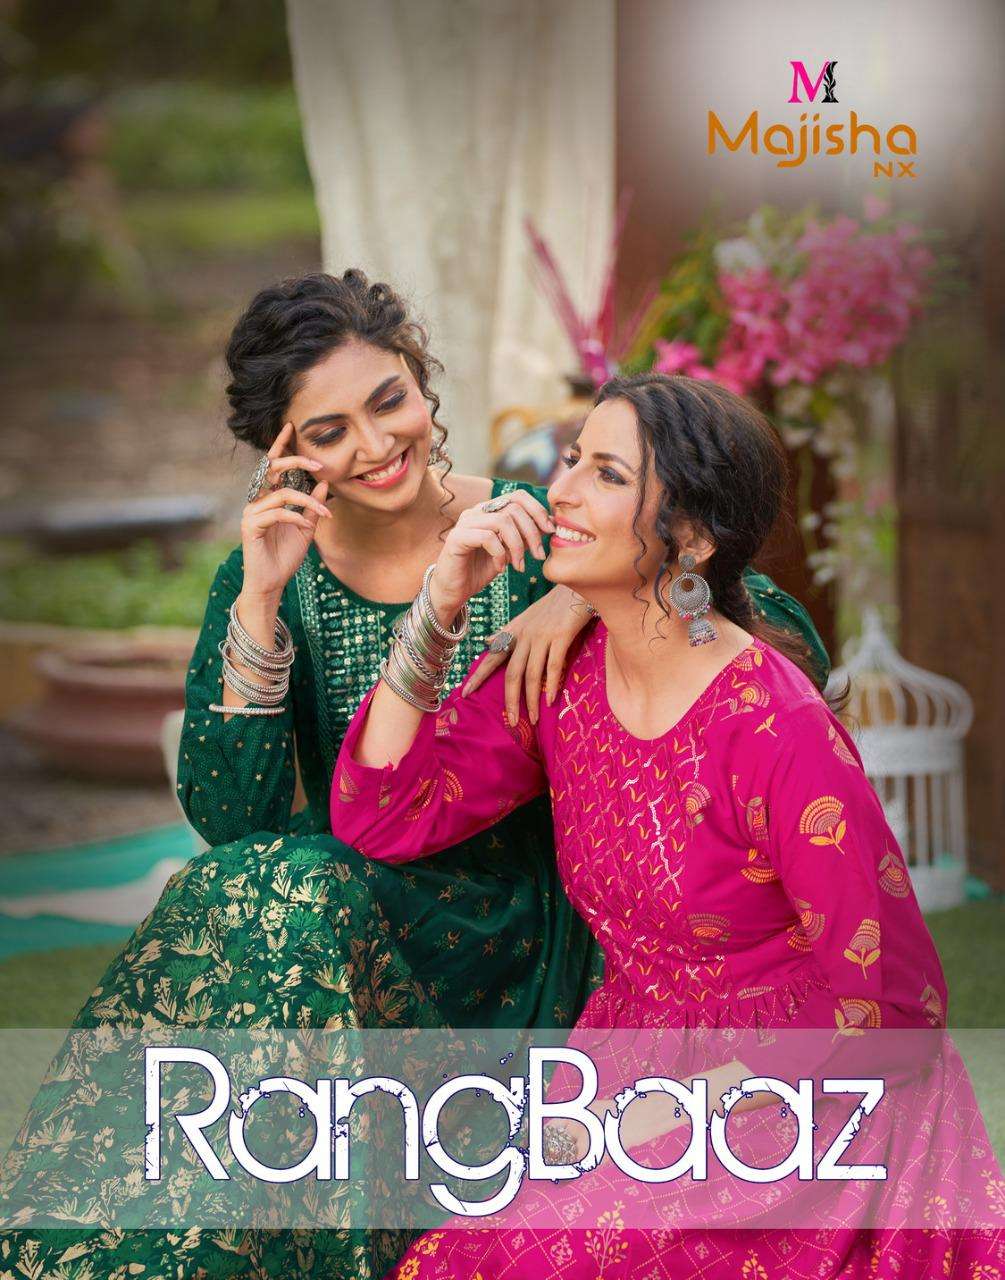 Rangbaz By Majisha NX Riya Designer Wholesale Online Kuratis Set